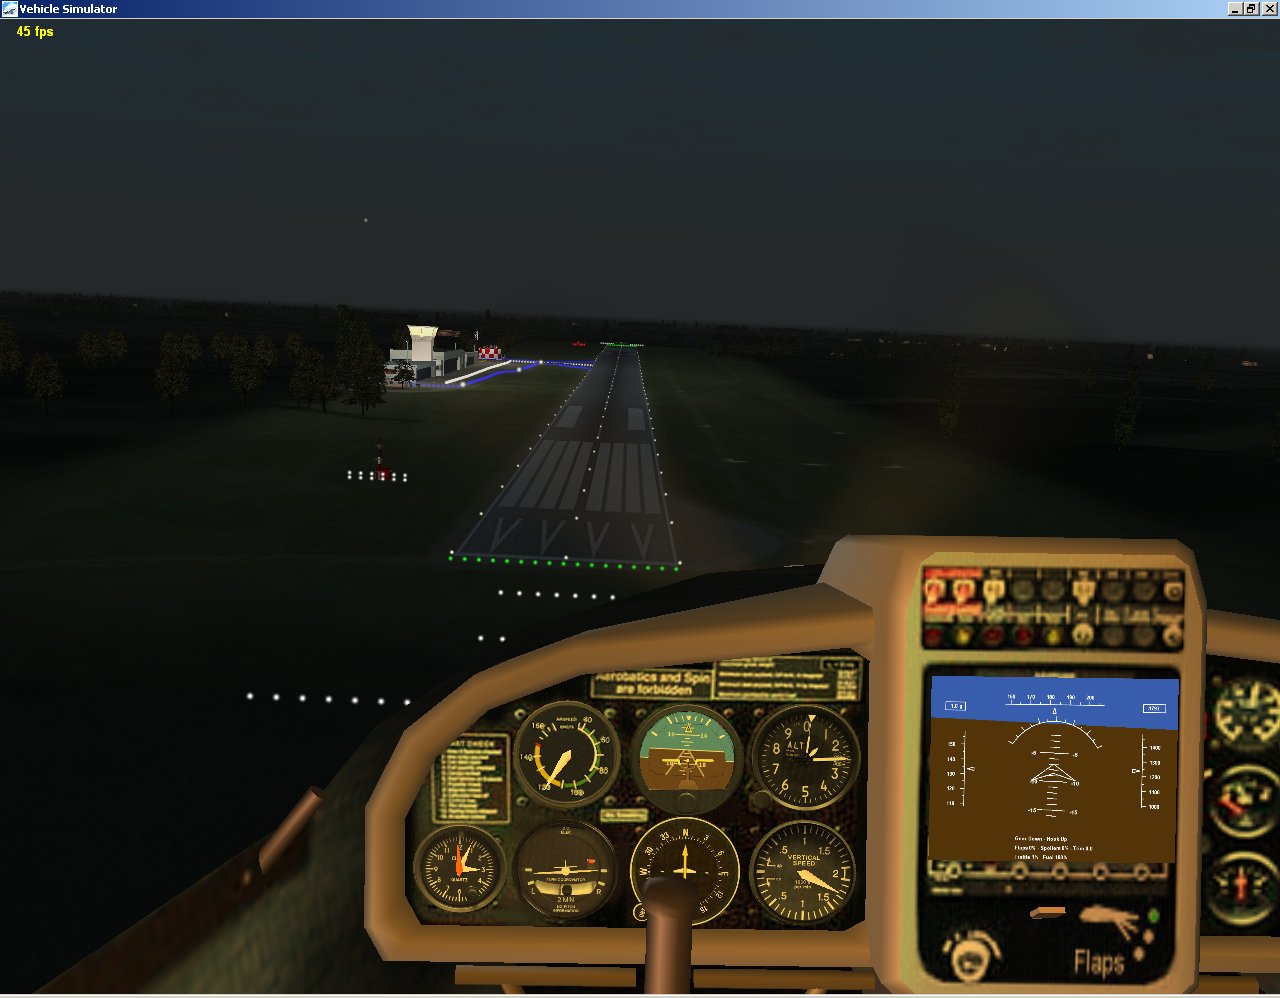 Vehicle Simulator Appid 416190 Steamdb - roblox vehicle simulator plane shop